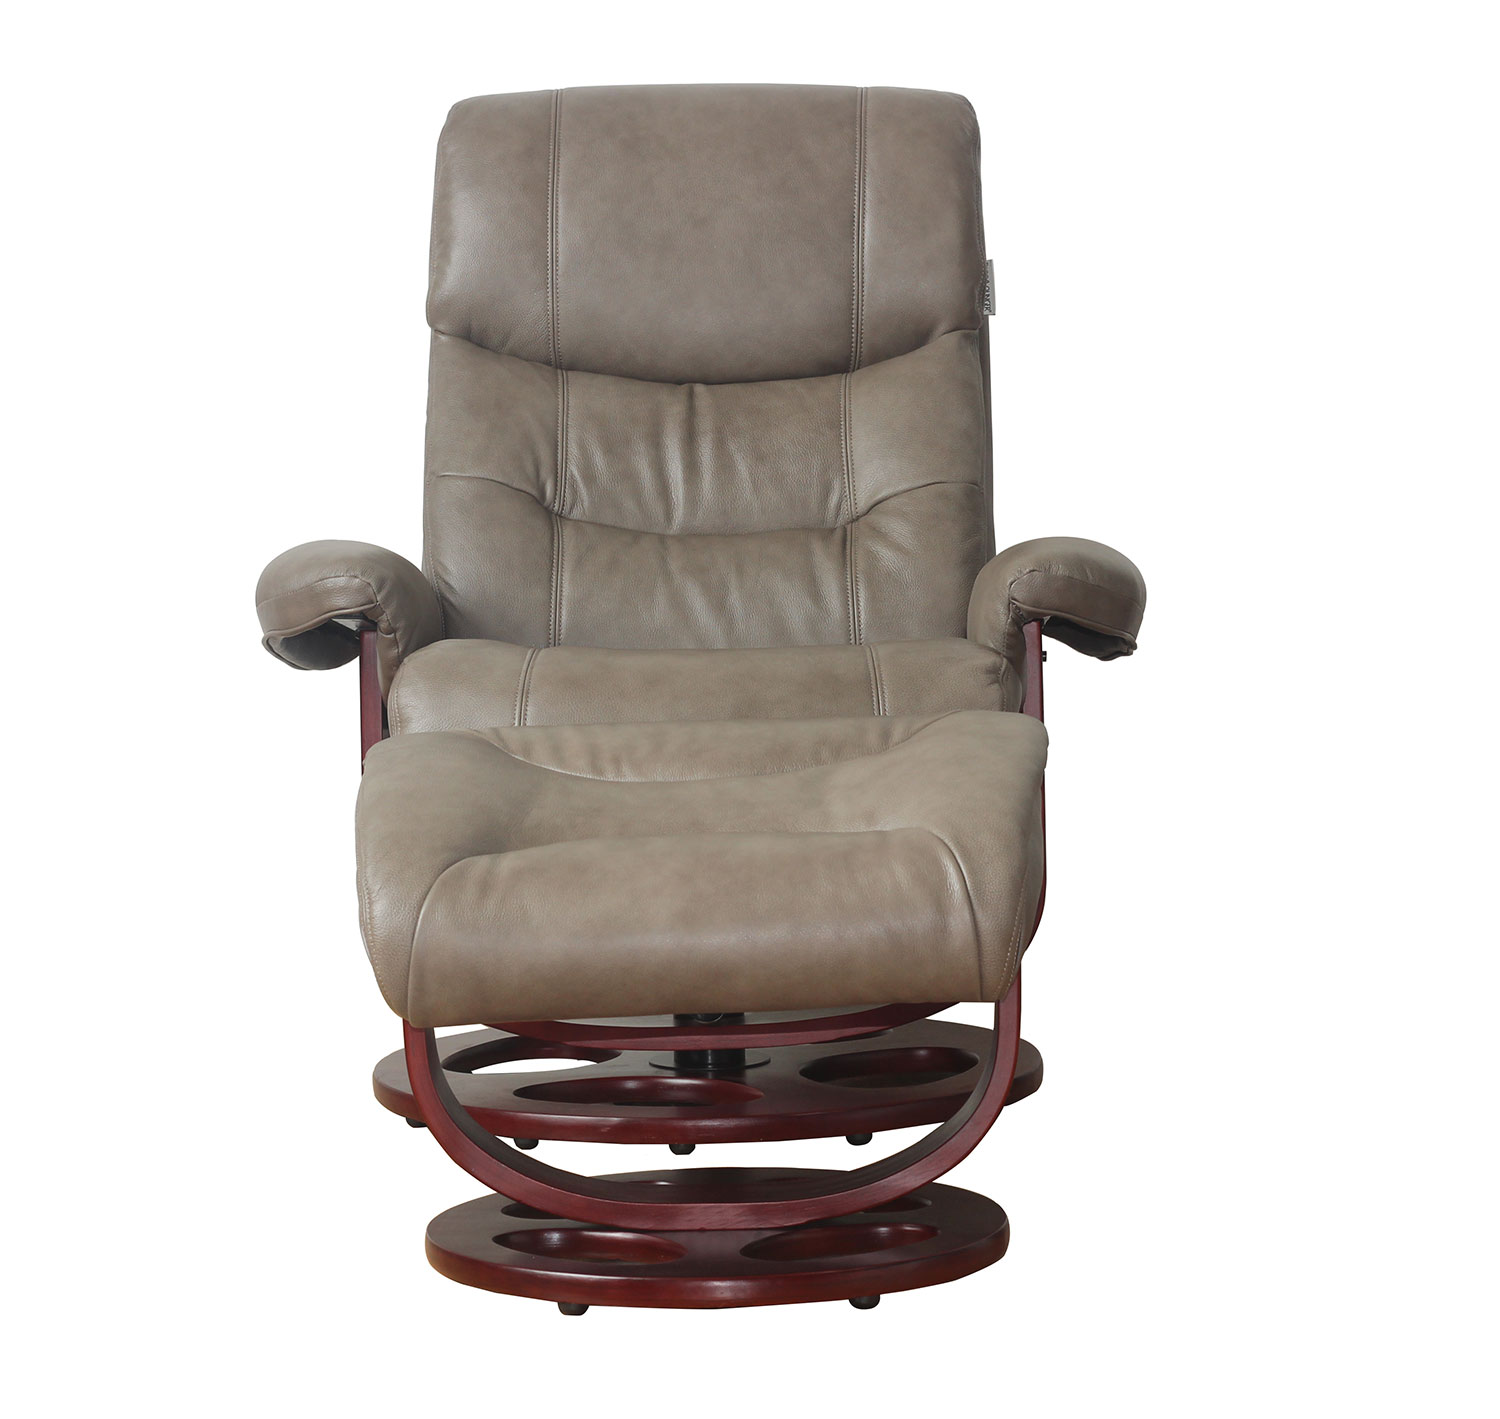 Barcalounger Dawson Pedestal Recliner Chair and Ottoman - Chelsea Cobblestone/Leather Match